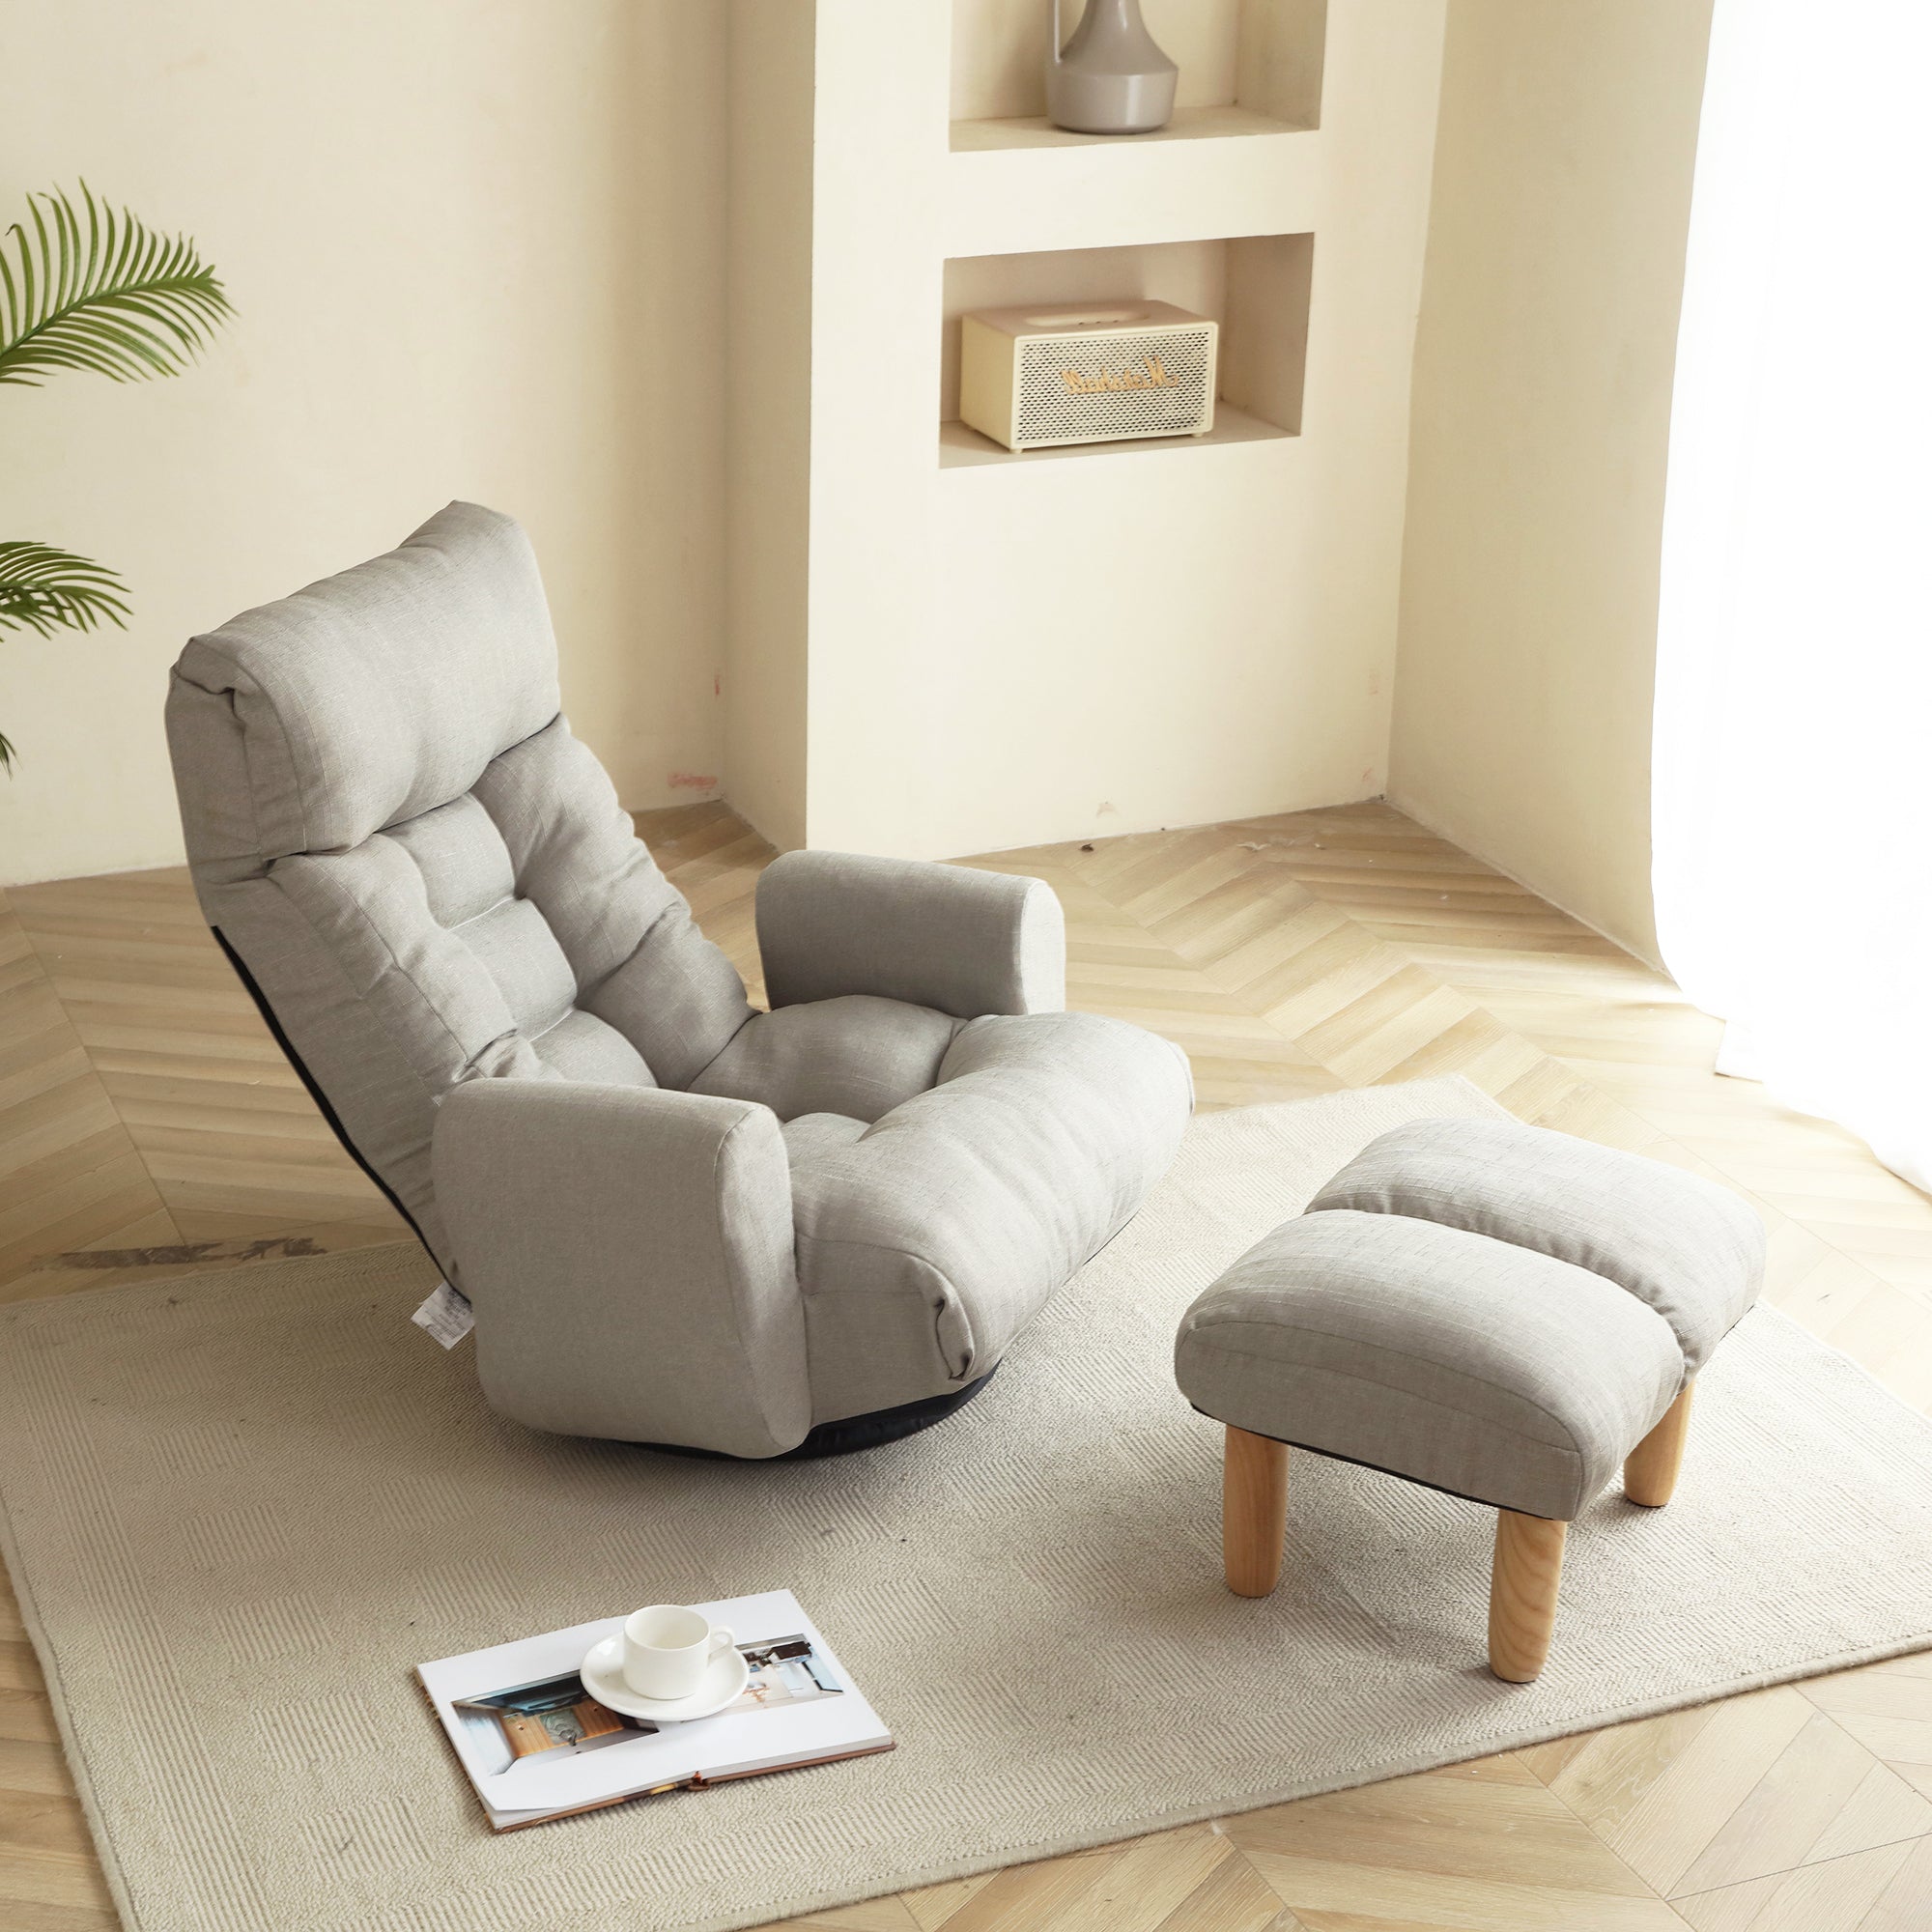 Swivel Indoor Recliner Floor Chair with Adjustable Headrest, Footstool, and Side Pockets- Gray